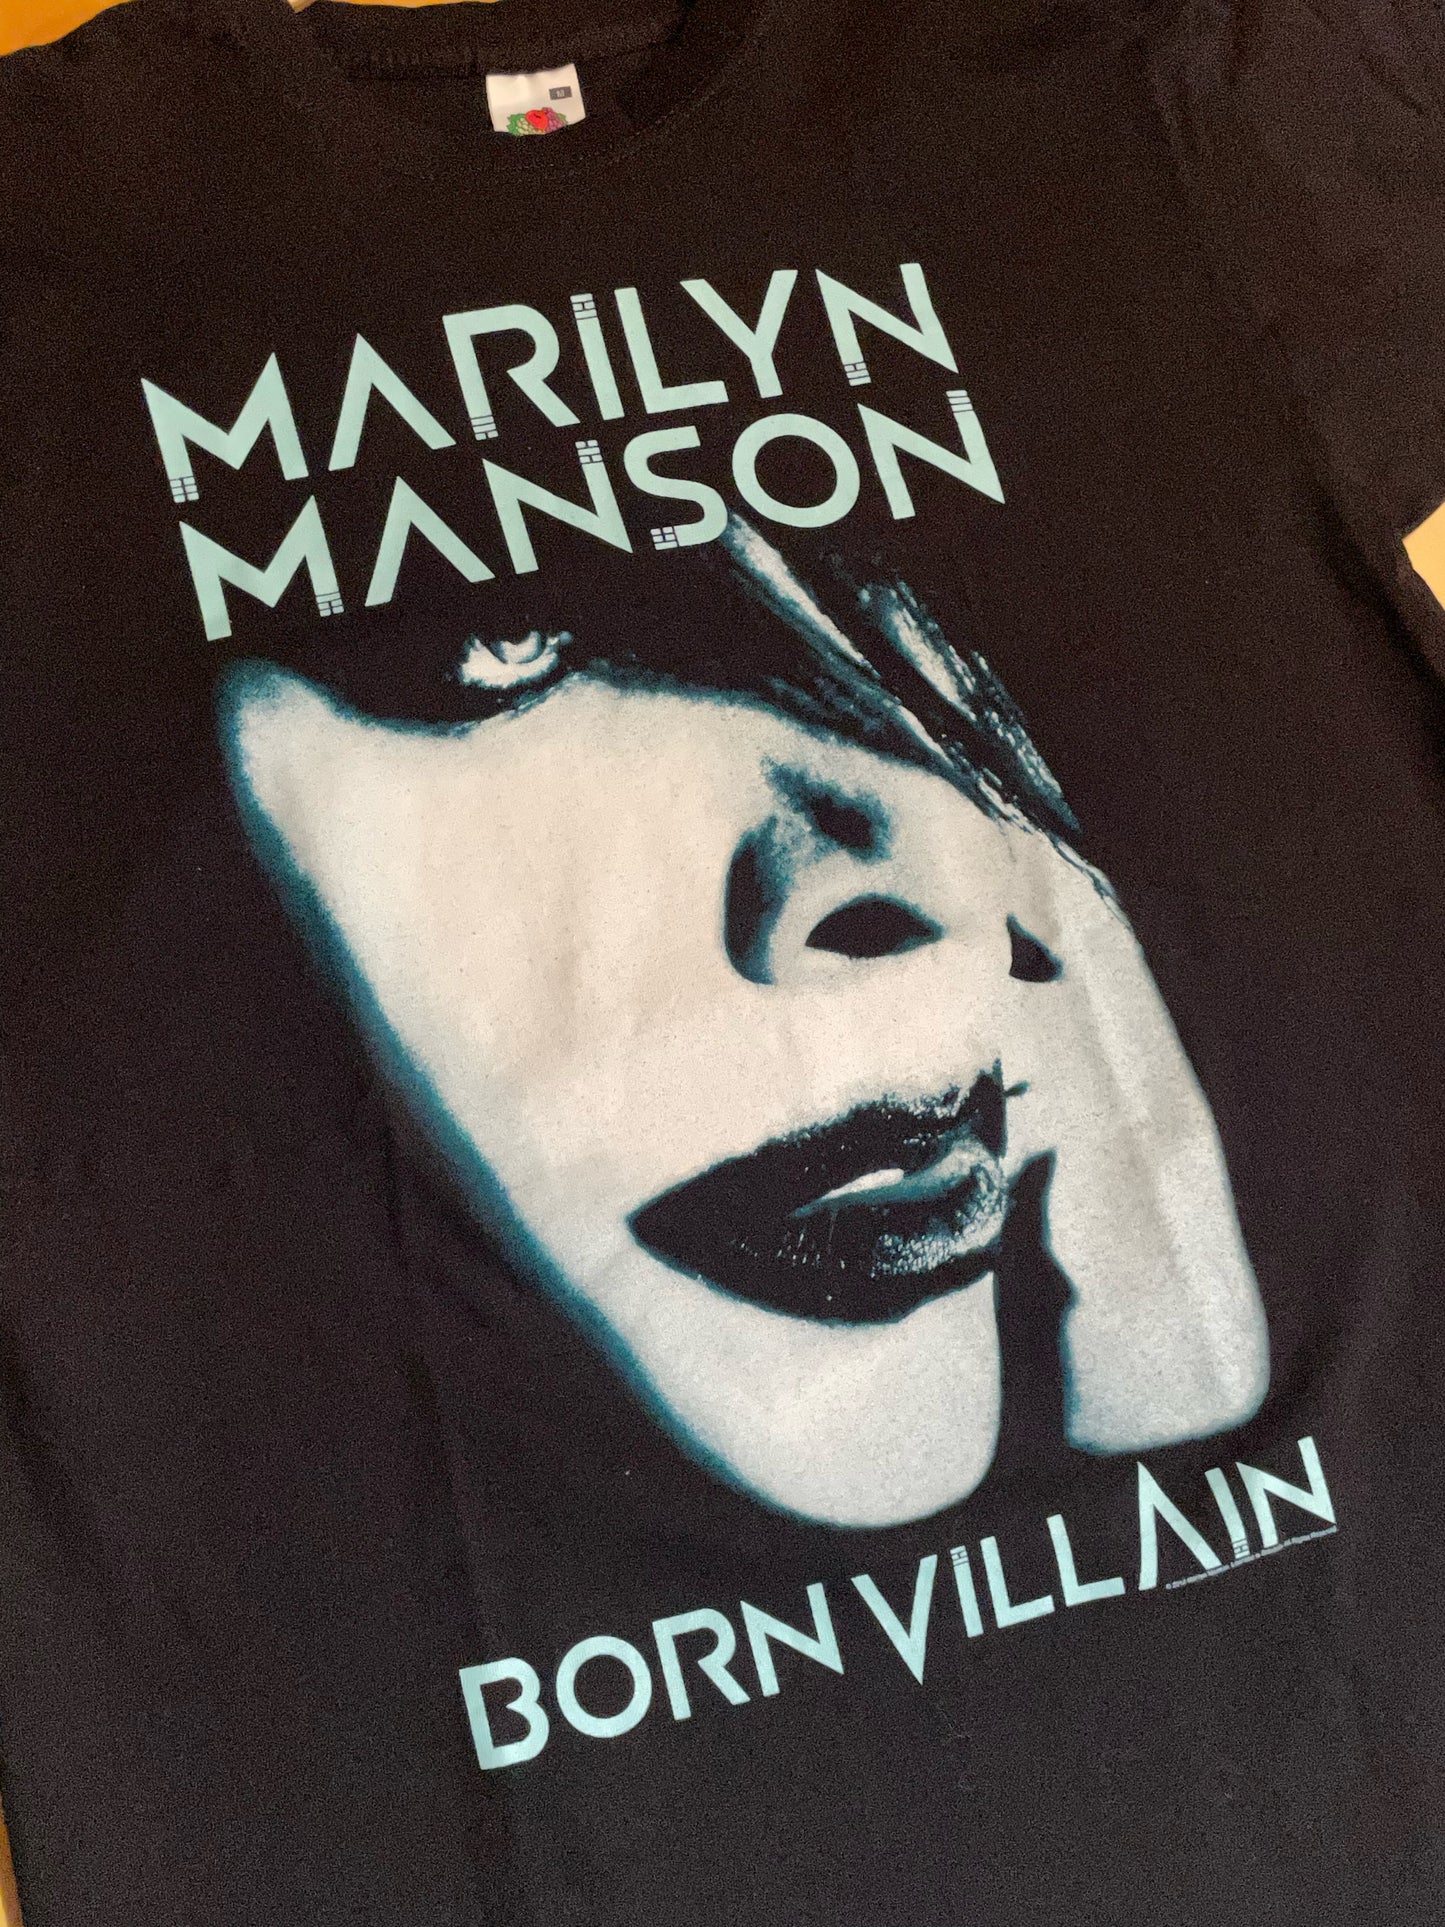 MARILYN MANSON "BORN VILLAIN" TOUR 2012 MUSICBAND T-SHIRT  SZ: M